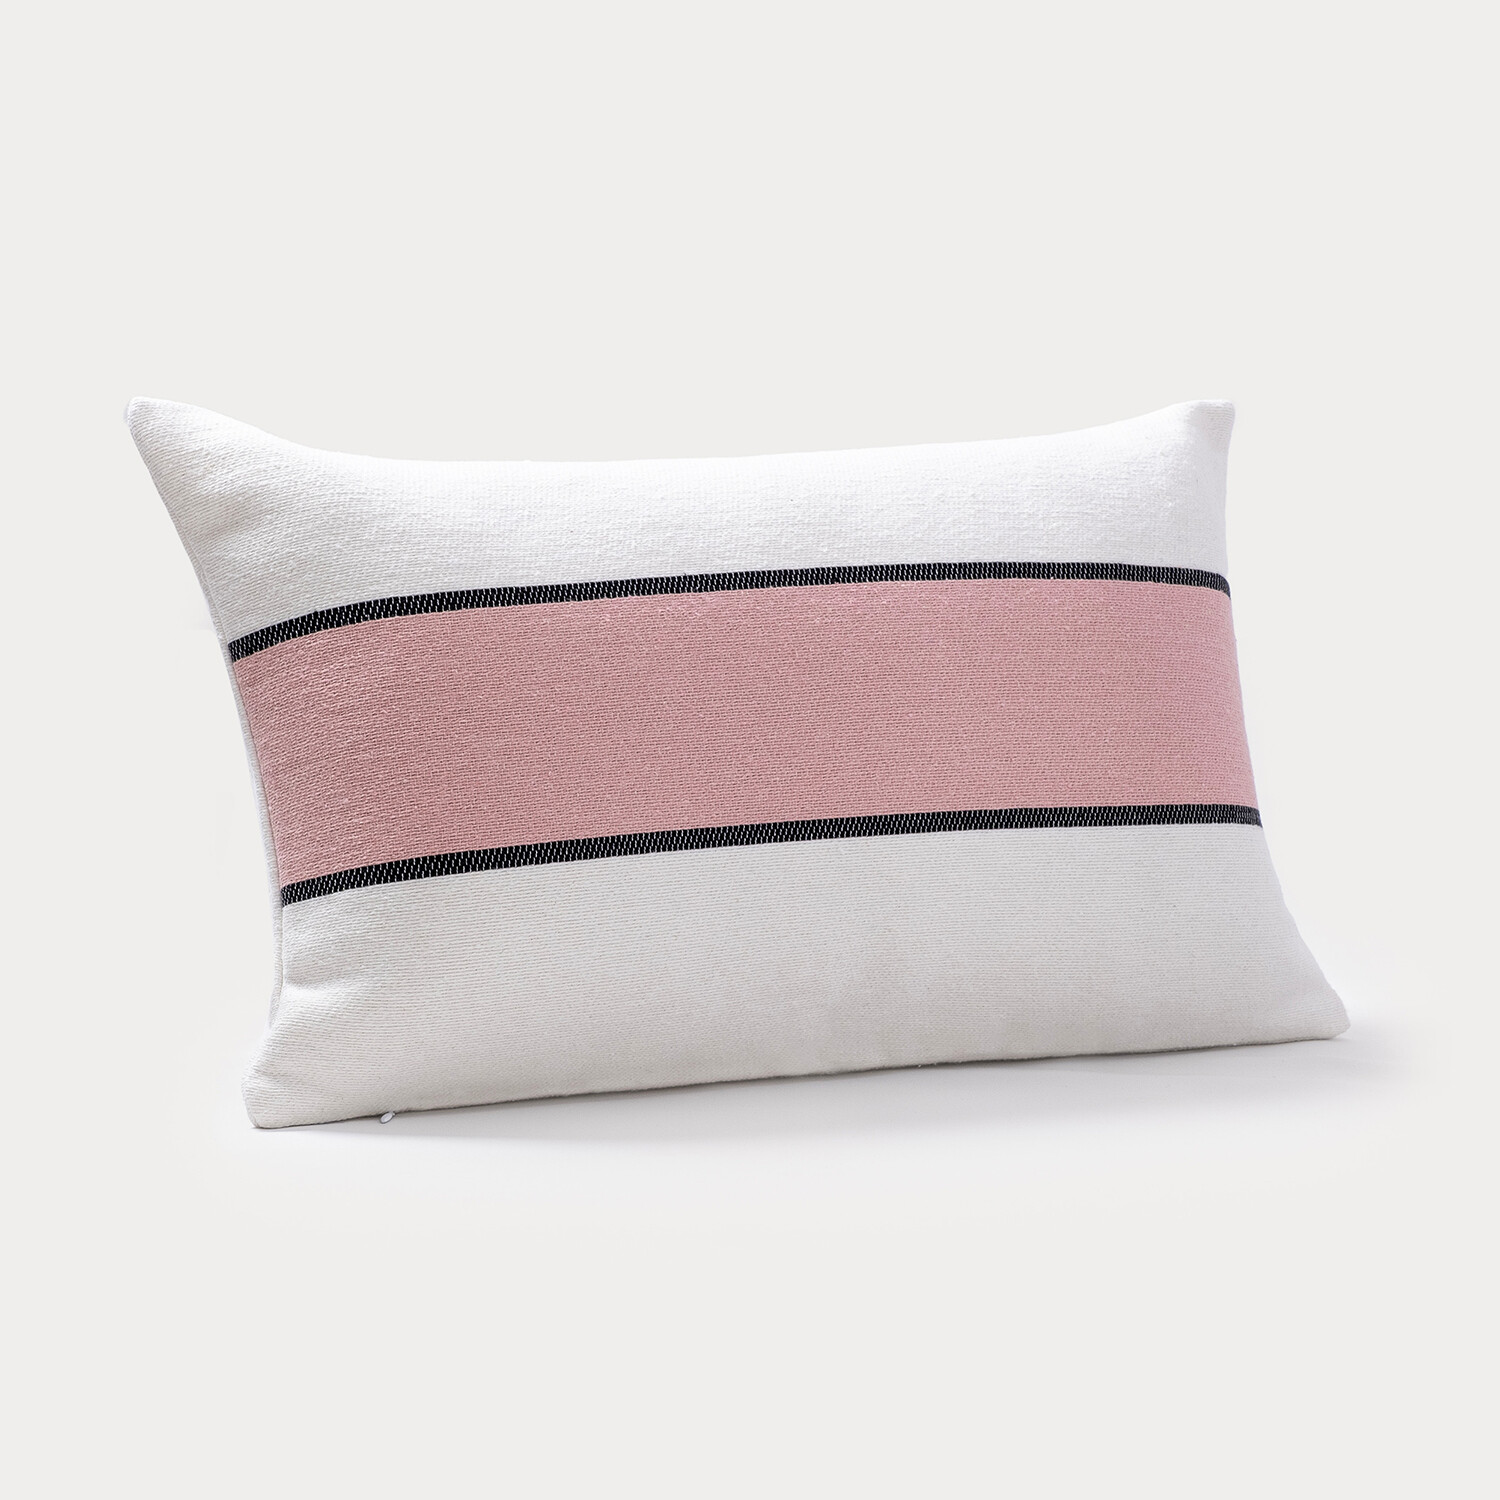 Modern Throw Pillows, Decorative Sofa Pillows, Blue, White, Gray